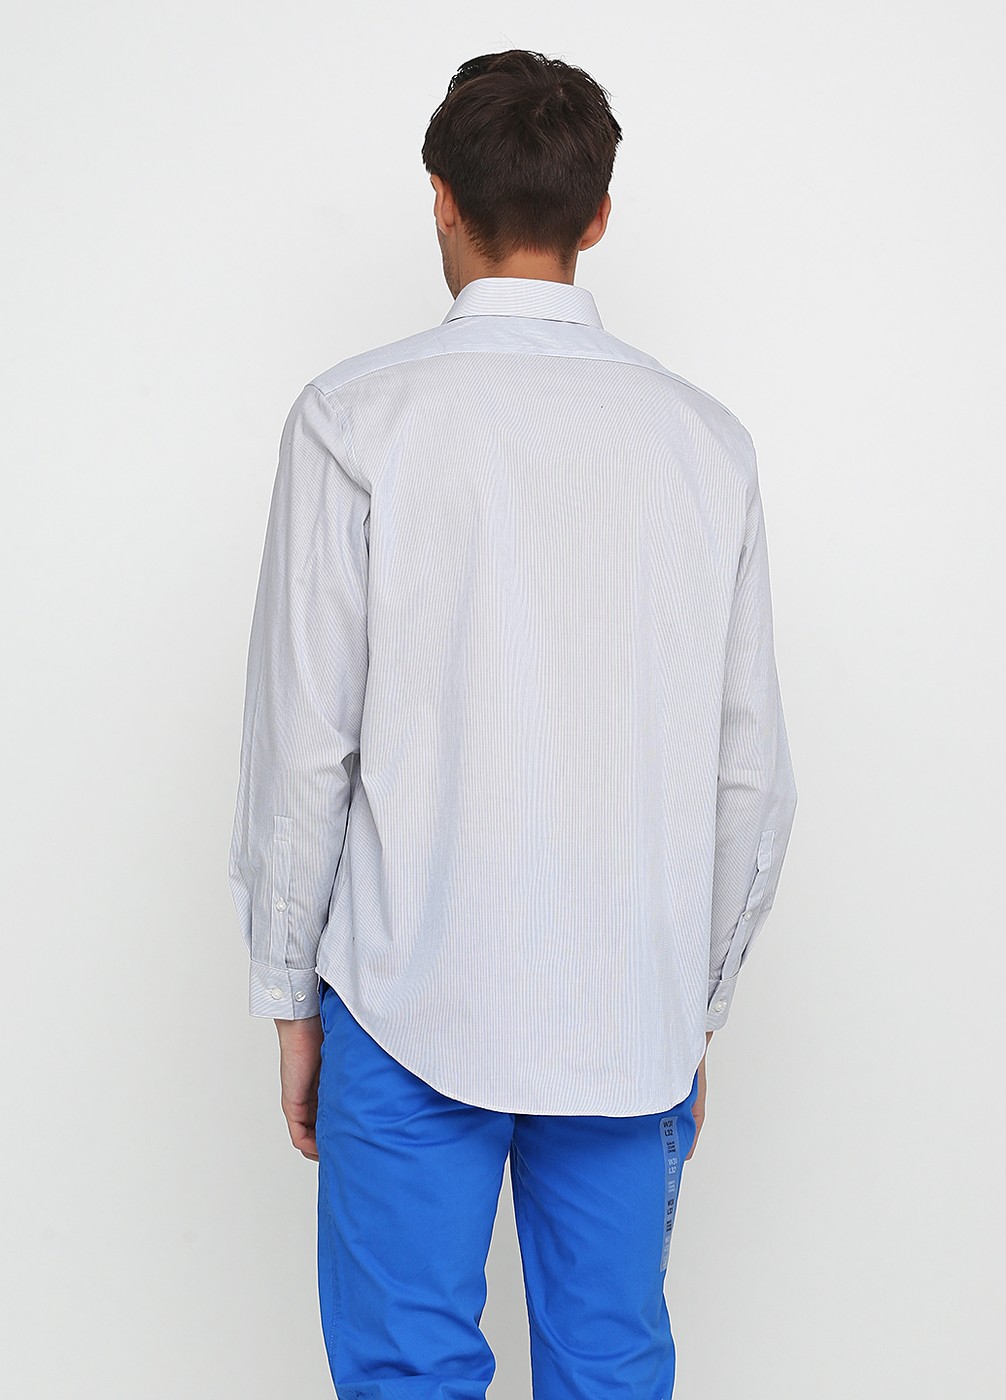 Мужская рубашка - рубашка Calvin Klein, L, L